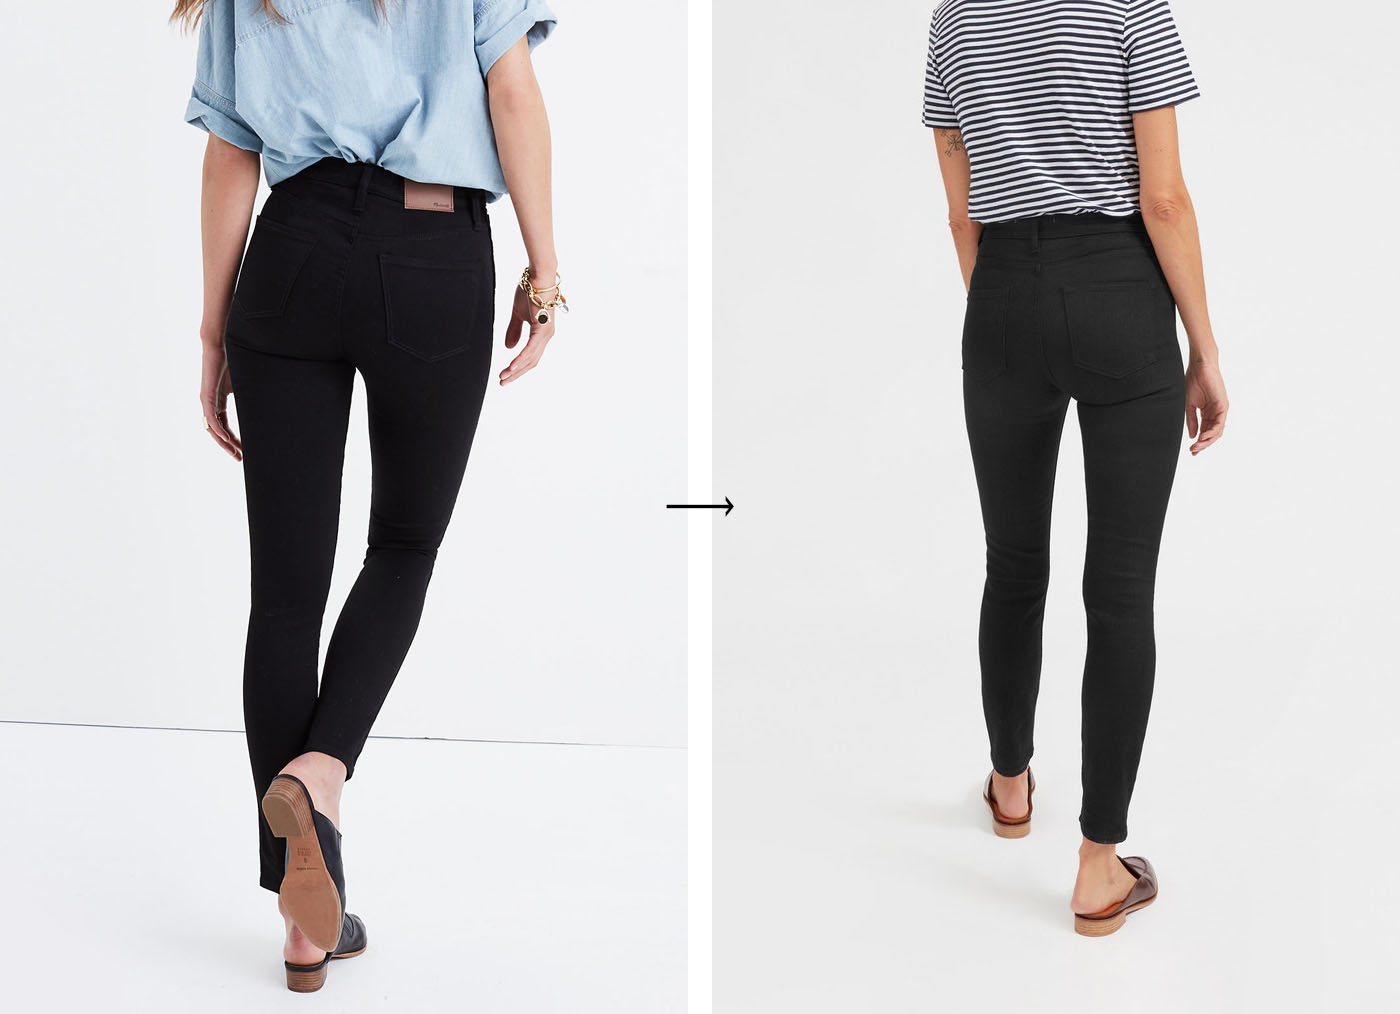 Feel Good Winter Wardrobe Swaps - Madewell 10" high-rise skinny jeans / Everlane High-Rise Skinny Jean